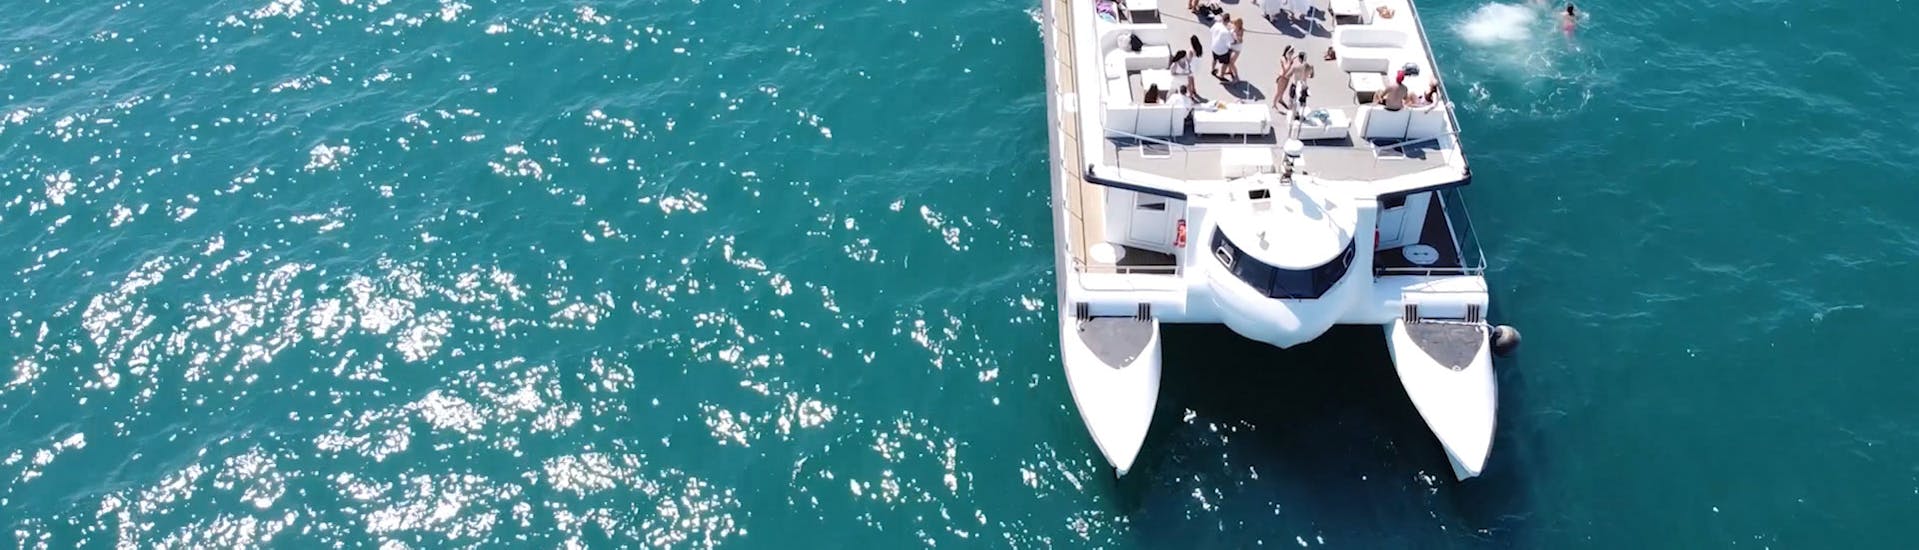 Balade en catamaran Valence - Port Saplatja avec Baignade & Visites touristiques.